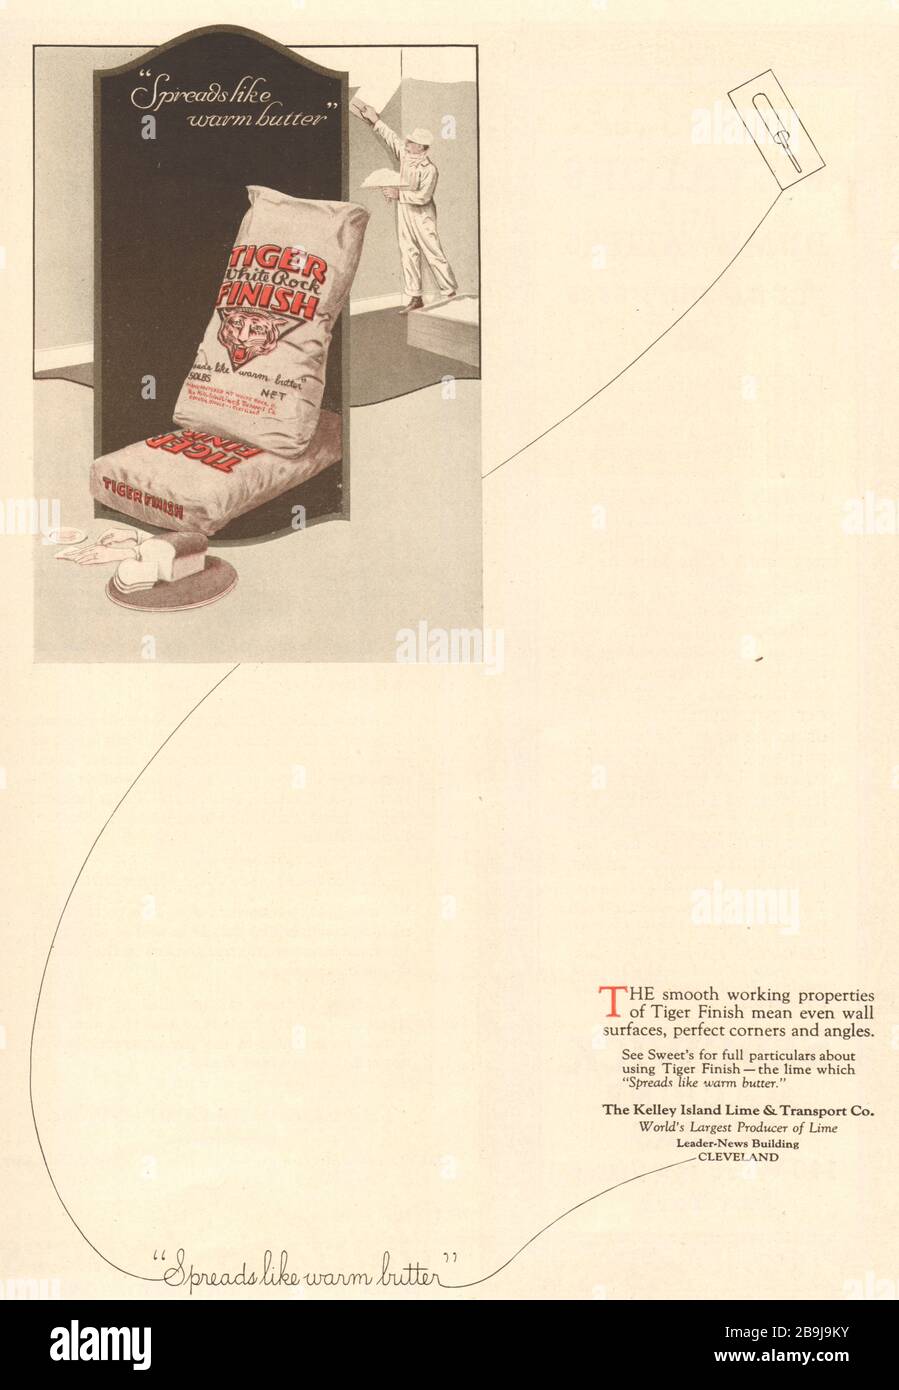 Tiger-Finish. "Preads like warm Butter". Leader-News-Gebäude der Kelley Island Limone & Transport Co., Cleveland (1922) Stockfoto